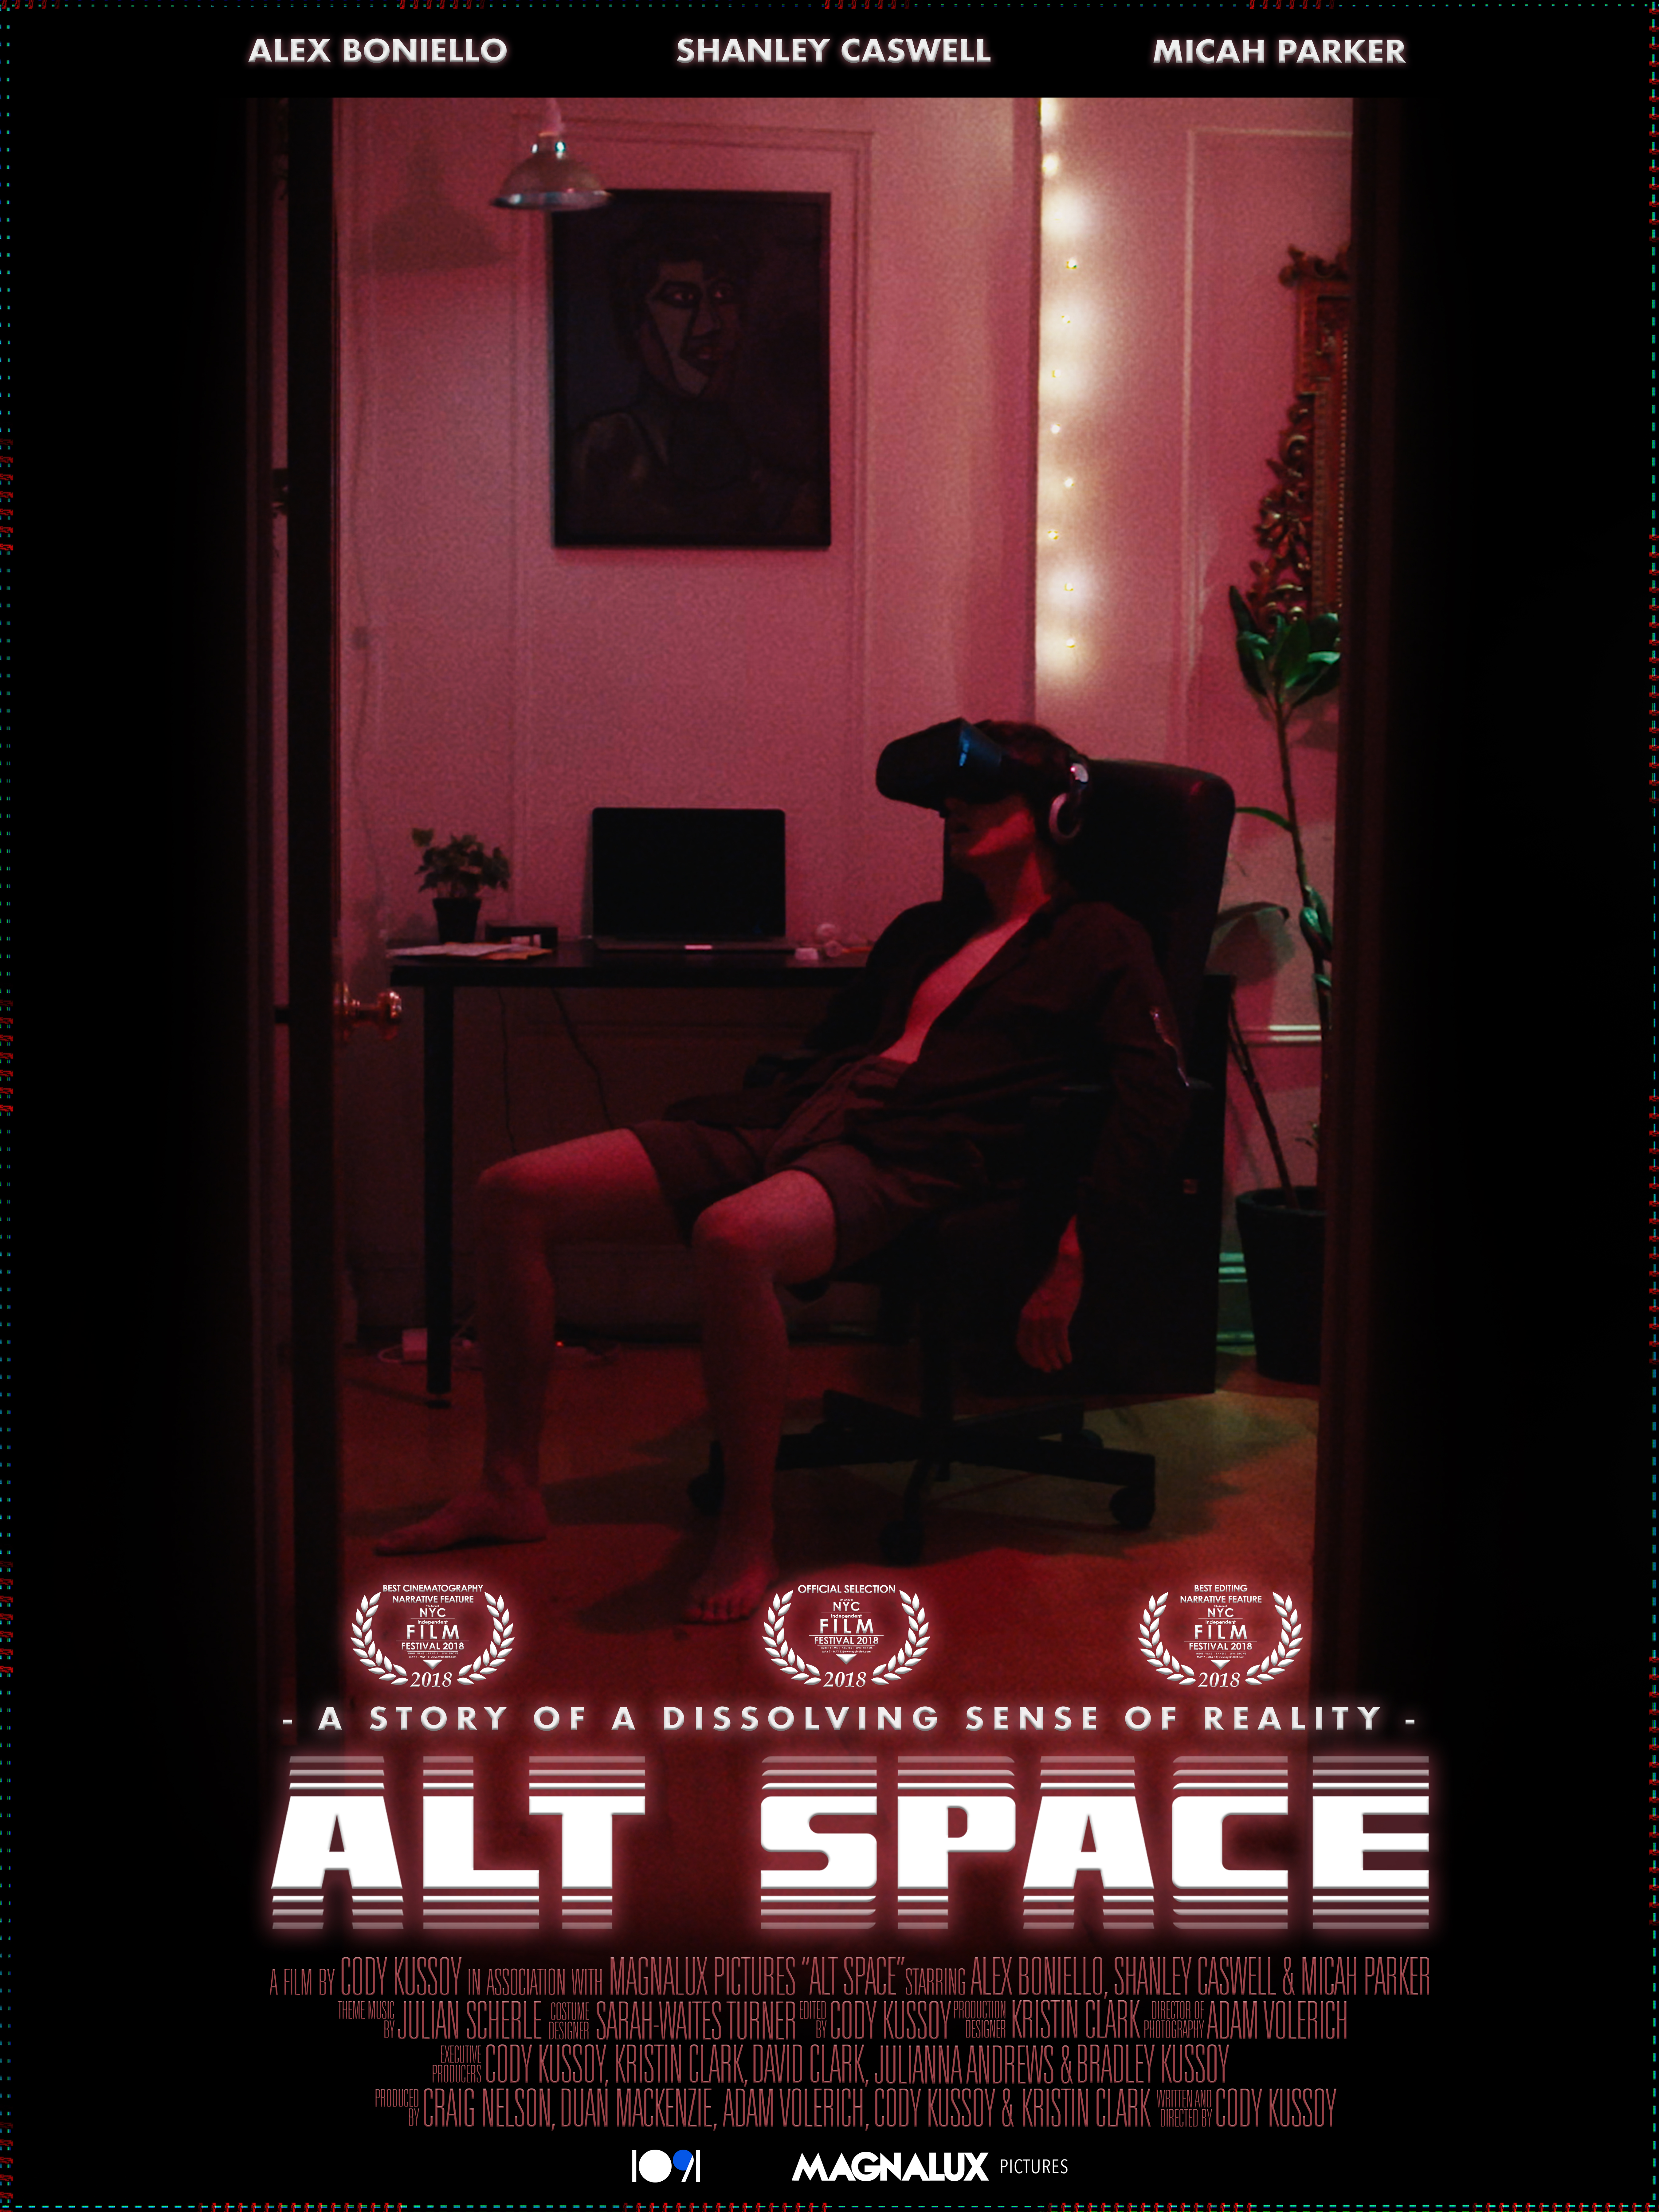 Alt Space (2018)